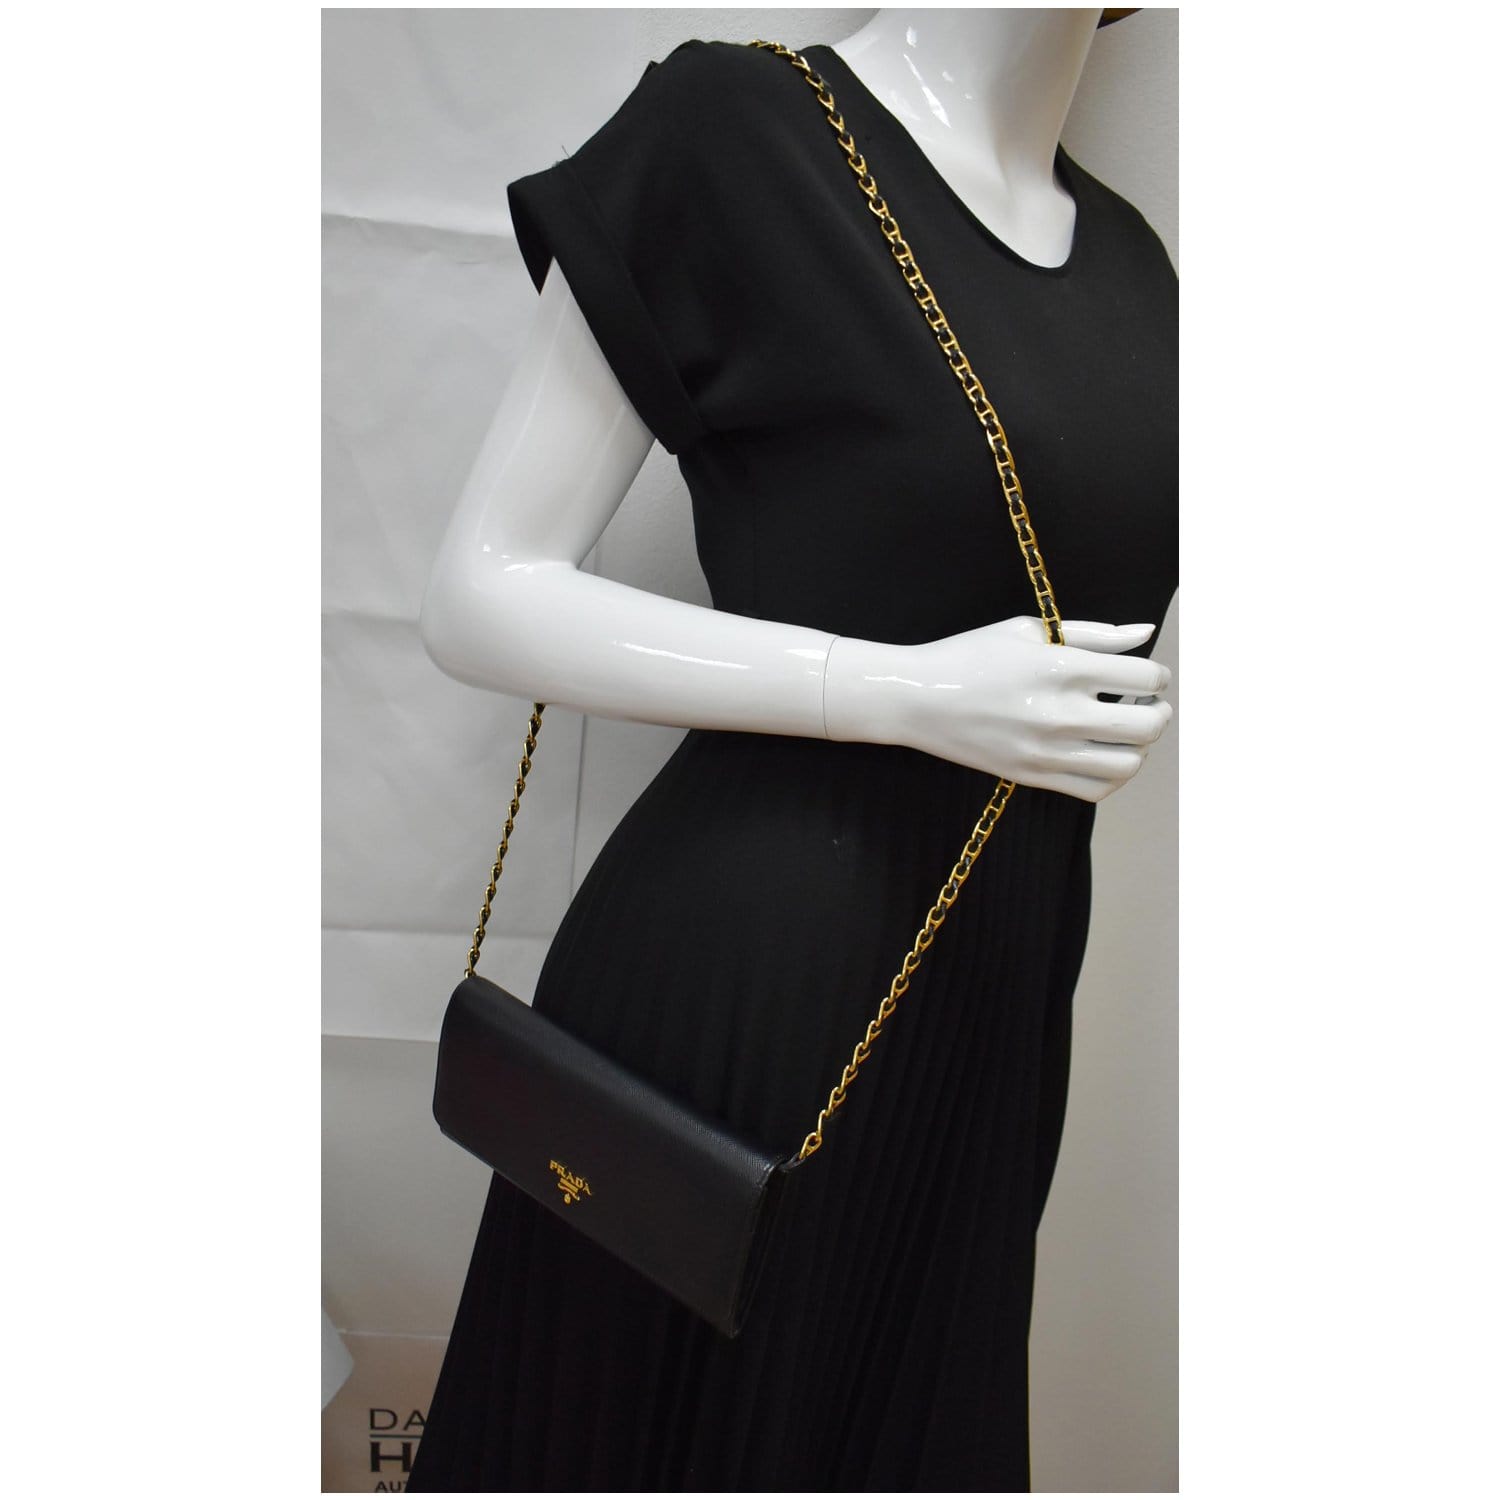 New AUTH. Prada Lux Saffiano Crossbody Shoulder Bag Wallet Clutch